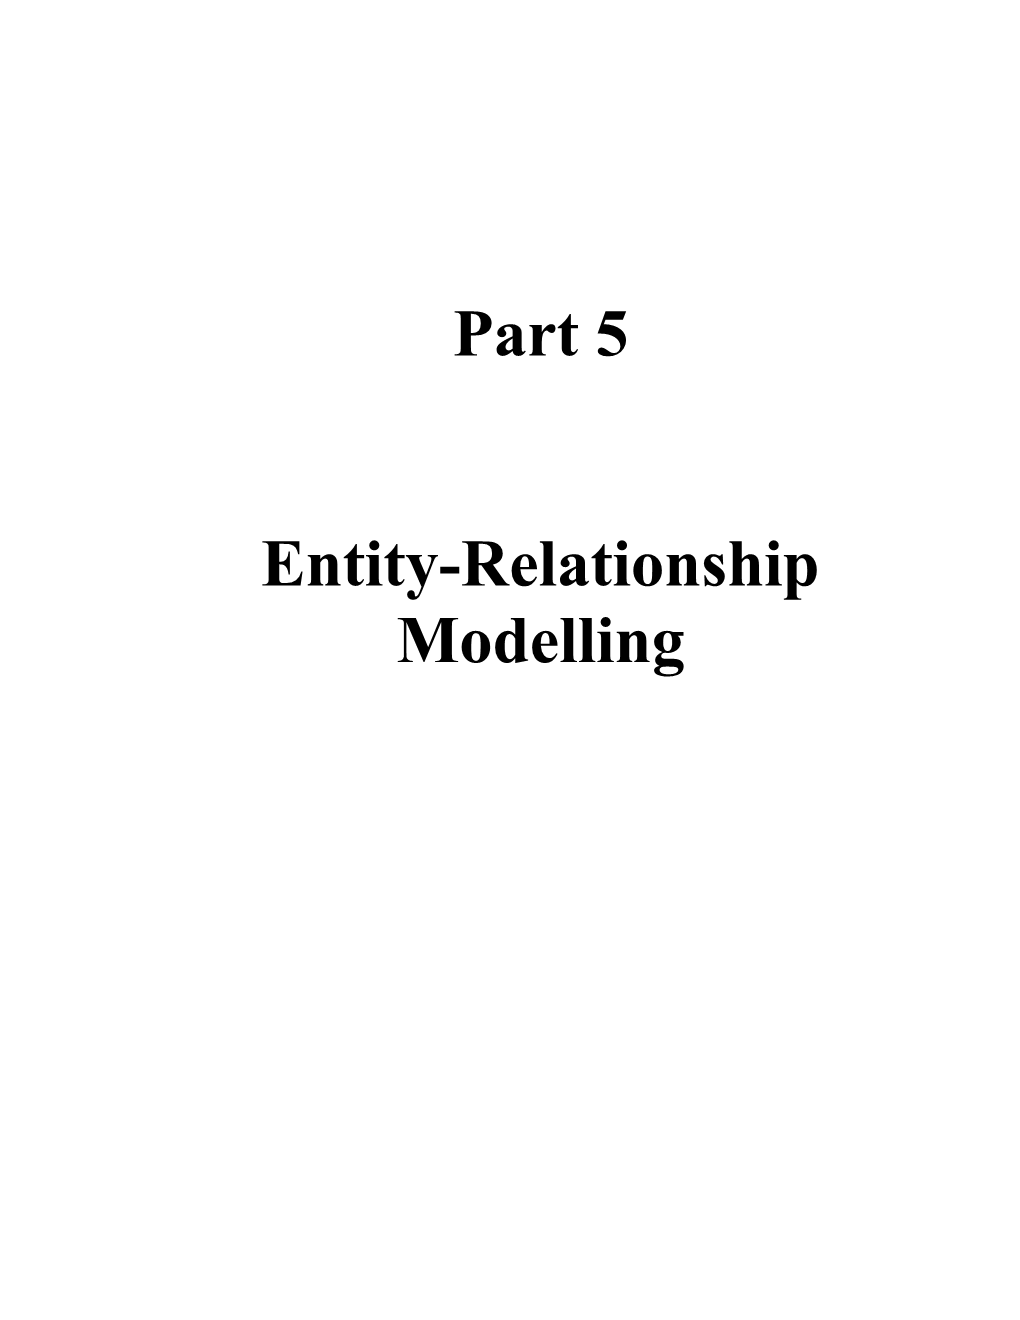 Ermodel - Entity-Relationship Modelling - Old Part 5